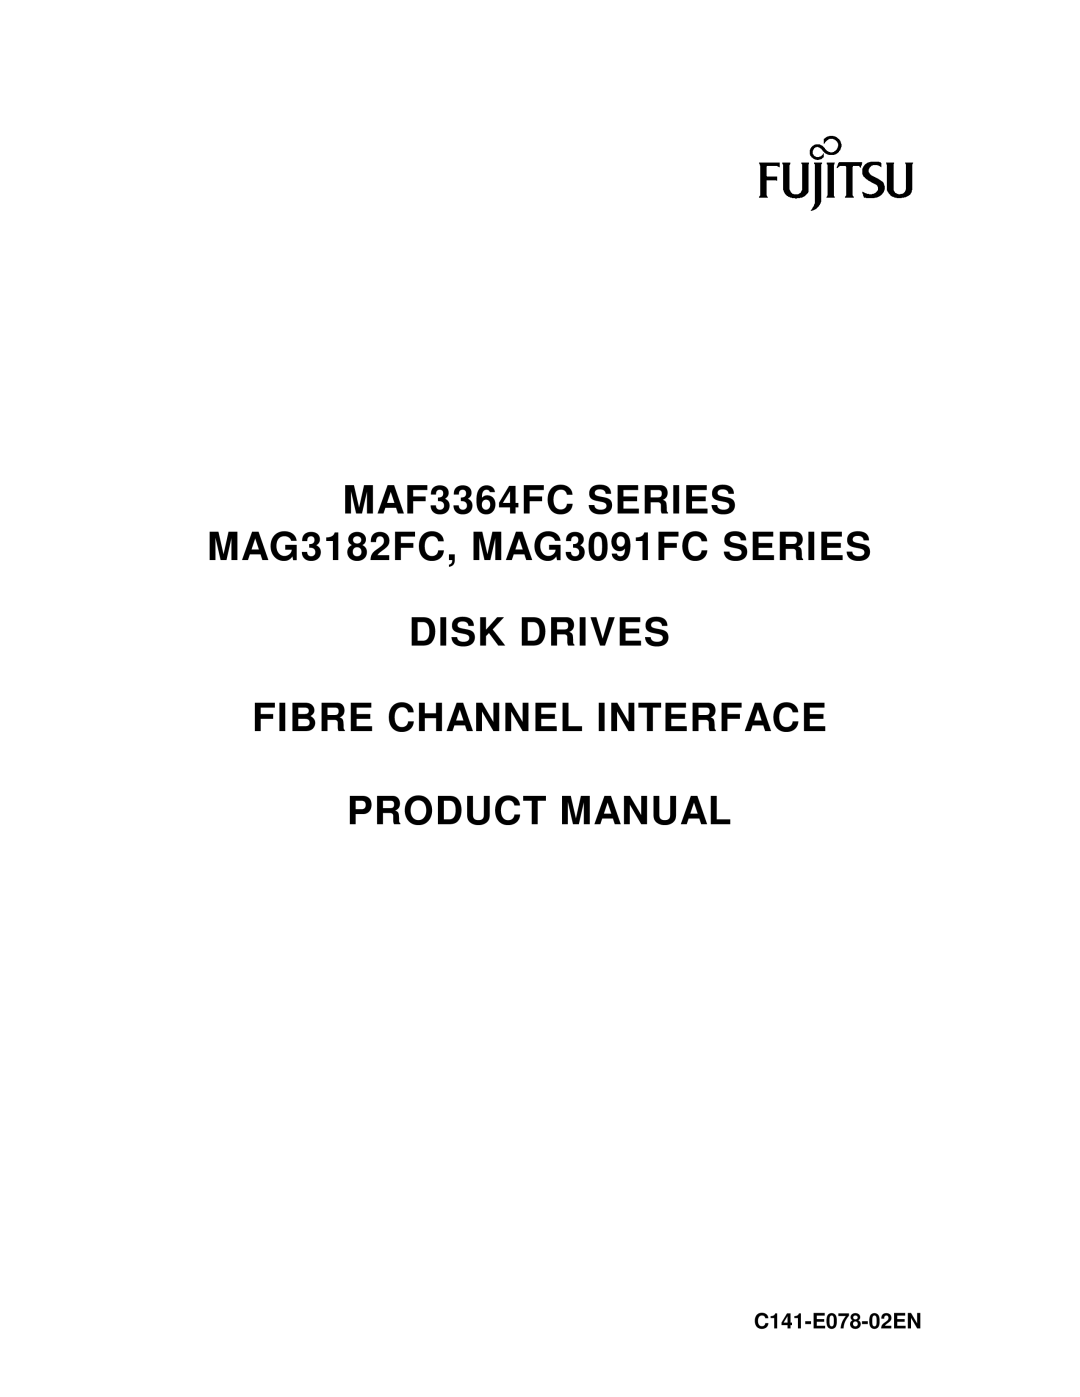 Fujitsu manual C141-E078-02EN, MAF3364FC SERIES MAG3182FC, MAG3091FC SERIES DISK DRIVES 